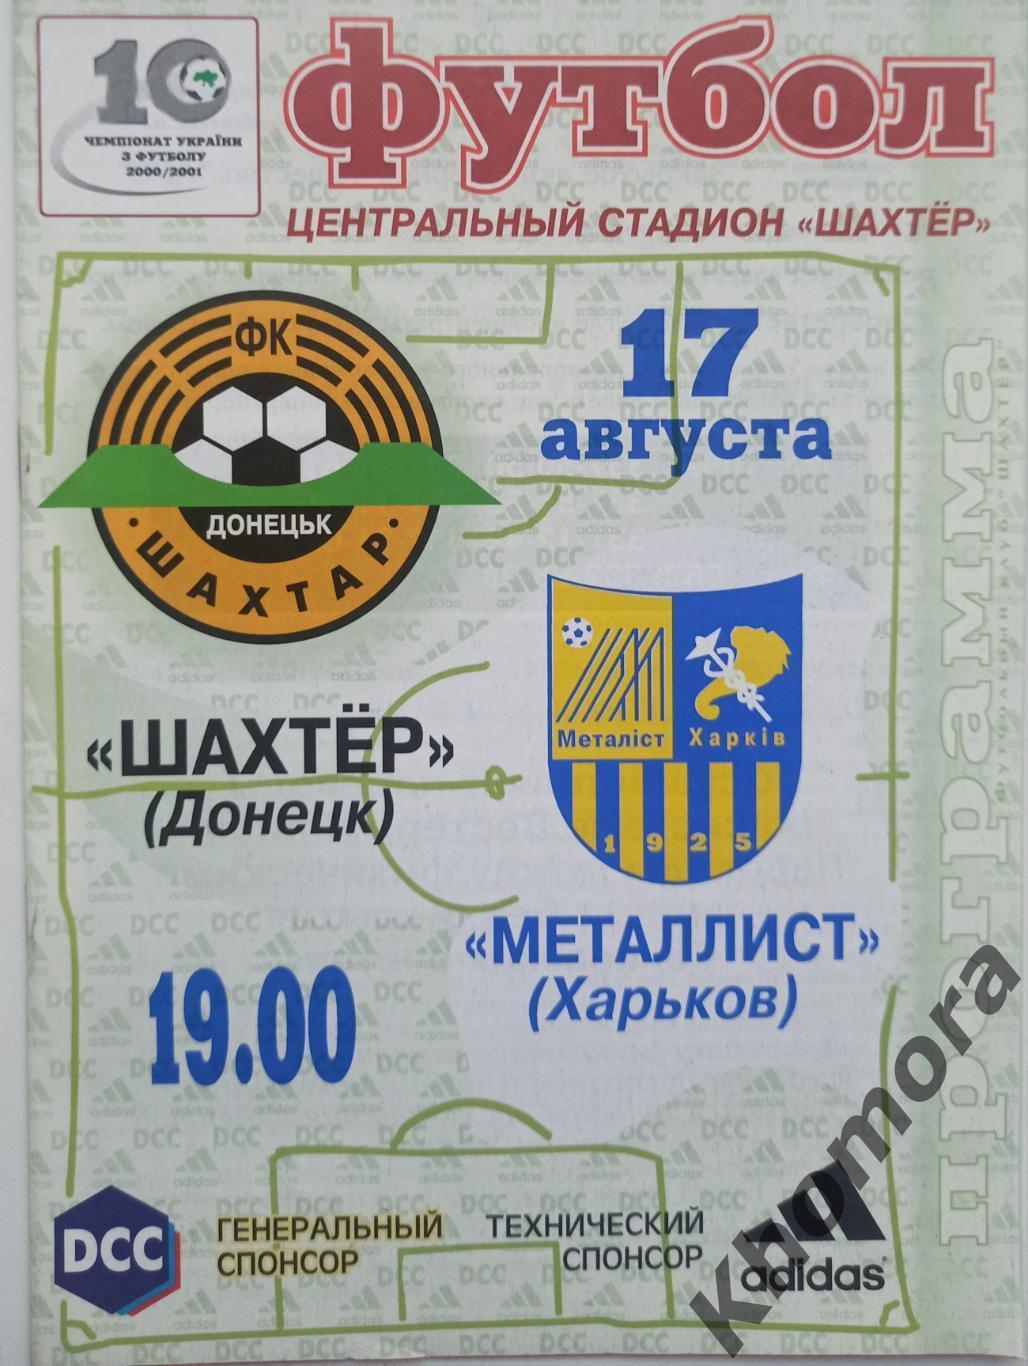 Шахтер (Донецк) - Металлист (Харьков) 17.08.2000 - официальная программа